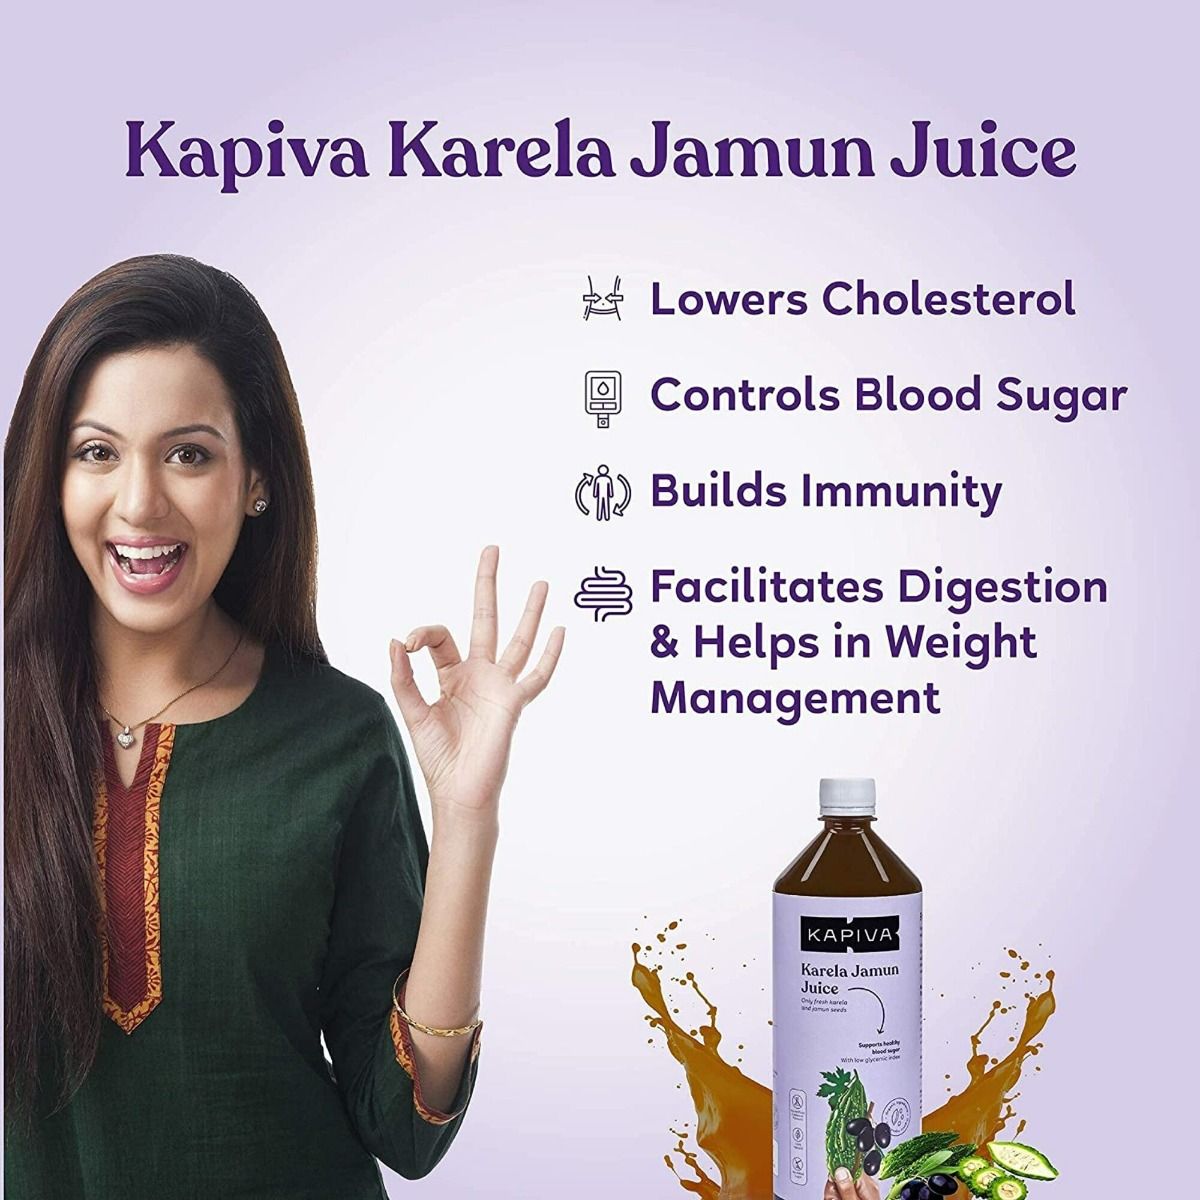 Kapiva Karela Jamun Juice, 1 L, Pack of 1 